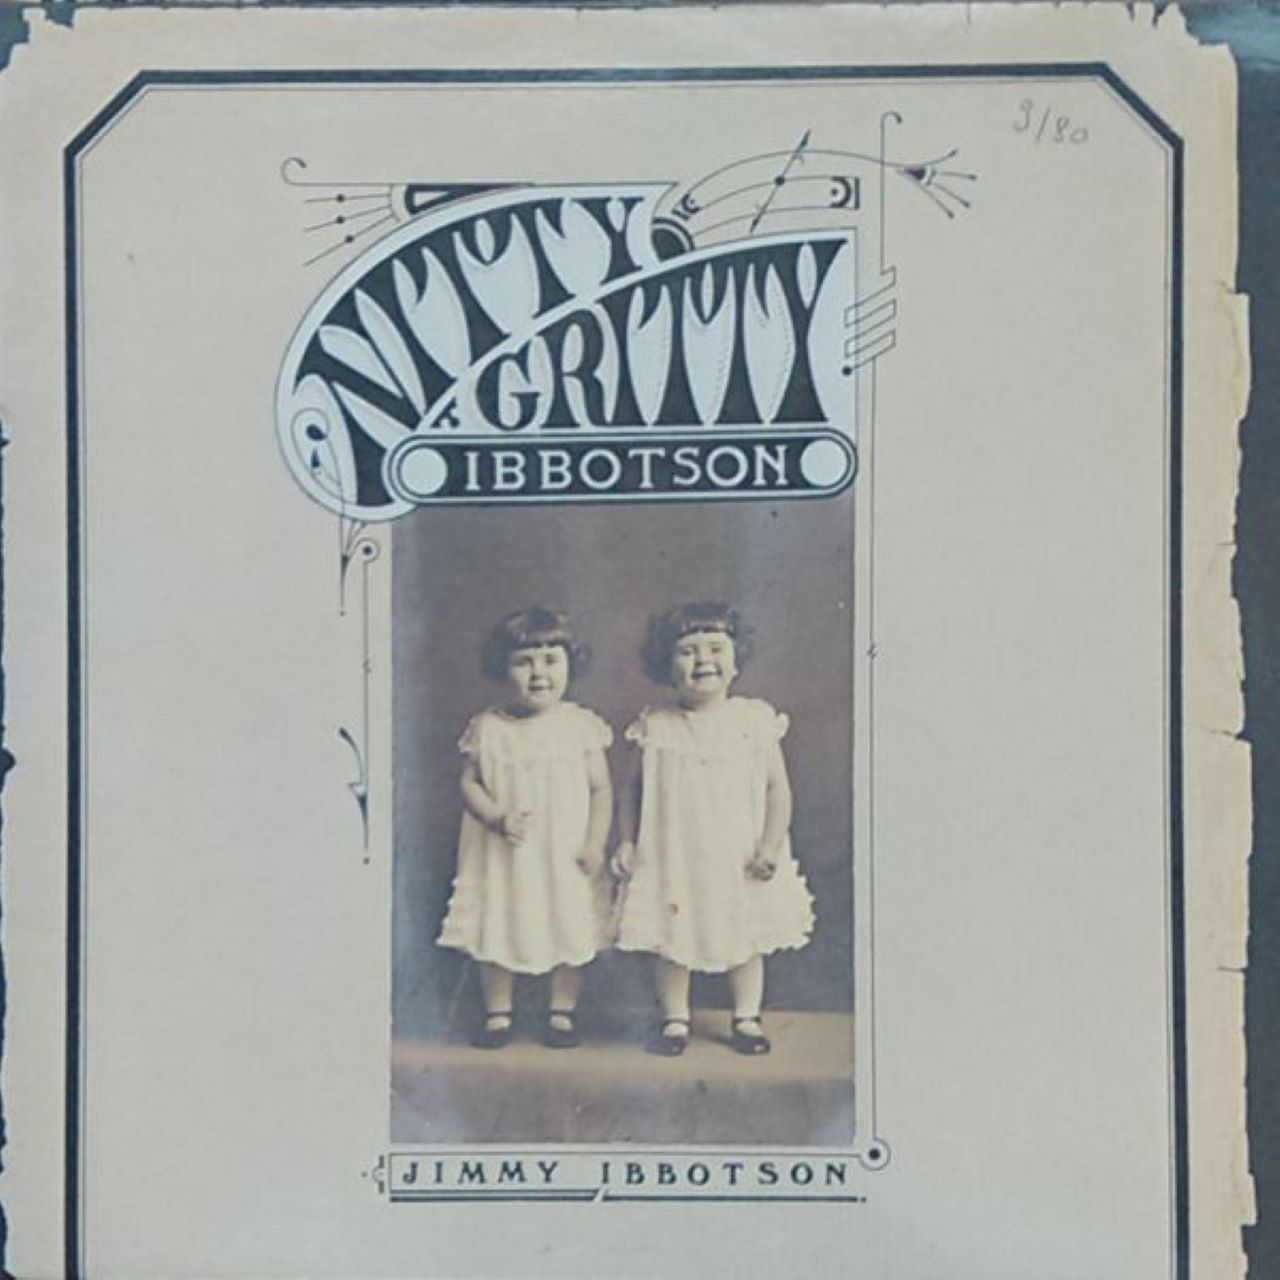 Jim Ibbotson - Nitty Gritty Ibbotson cover album